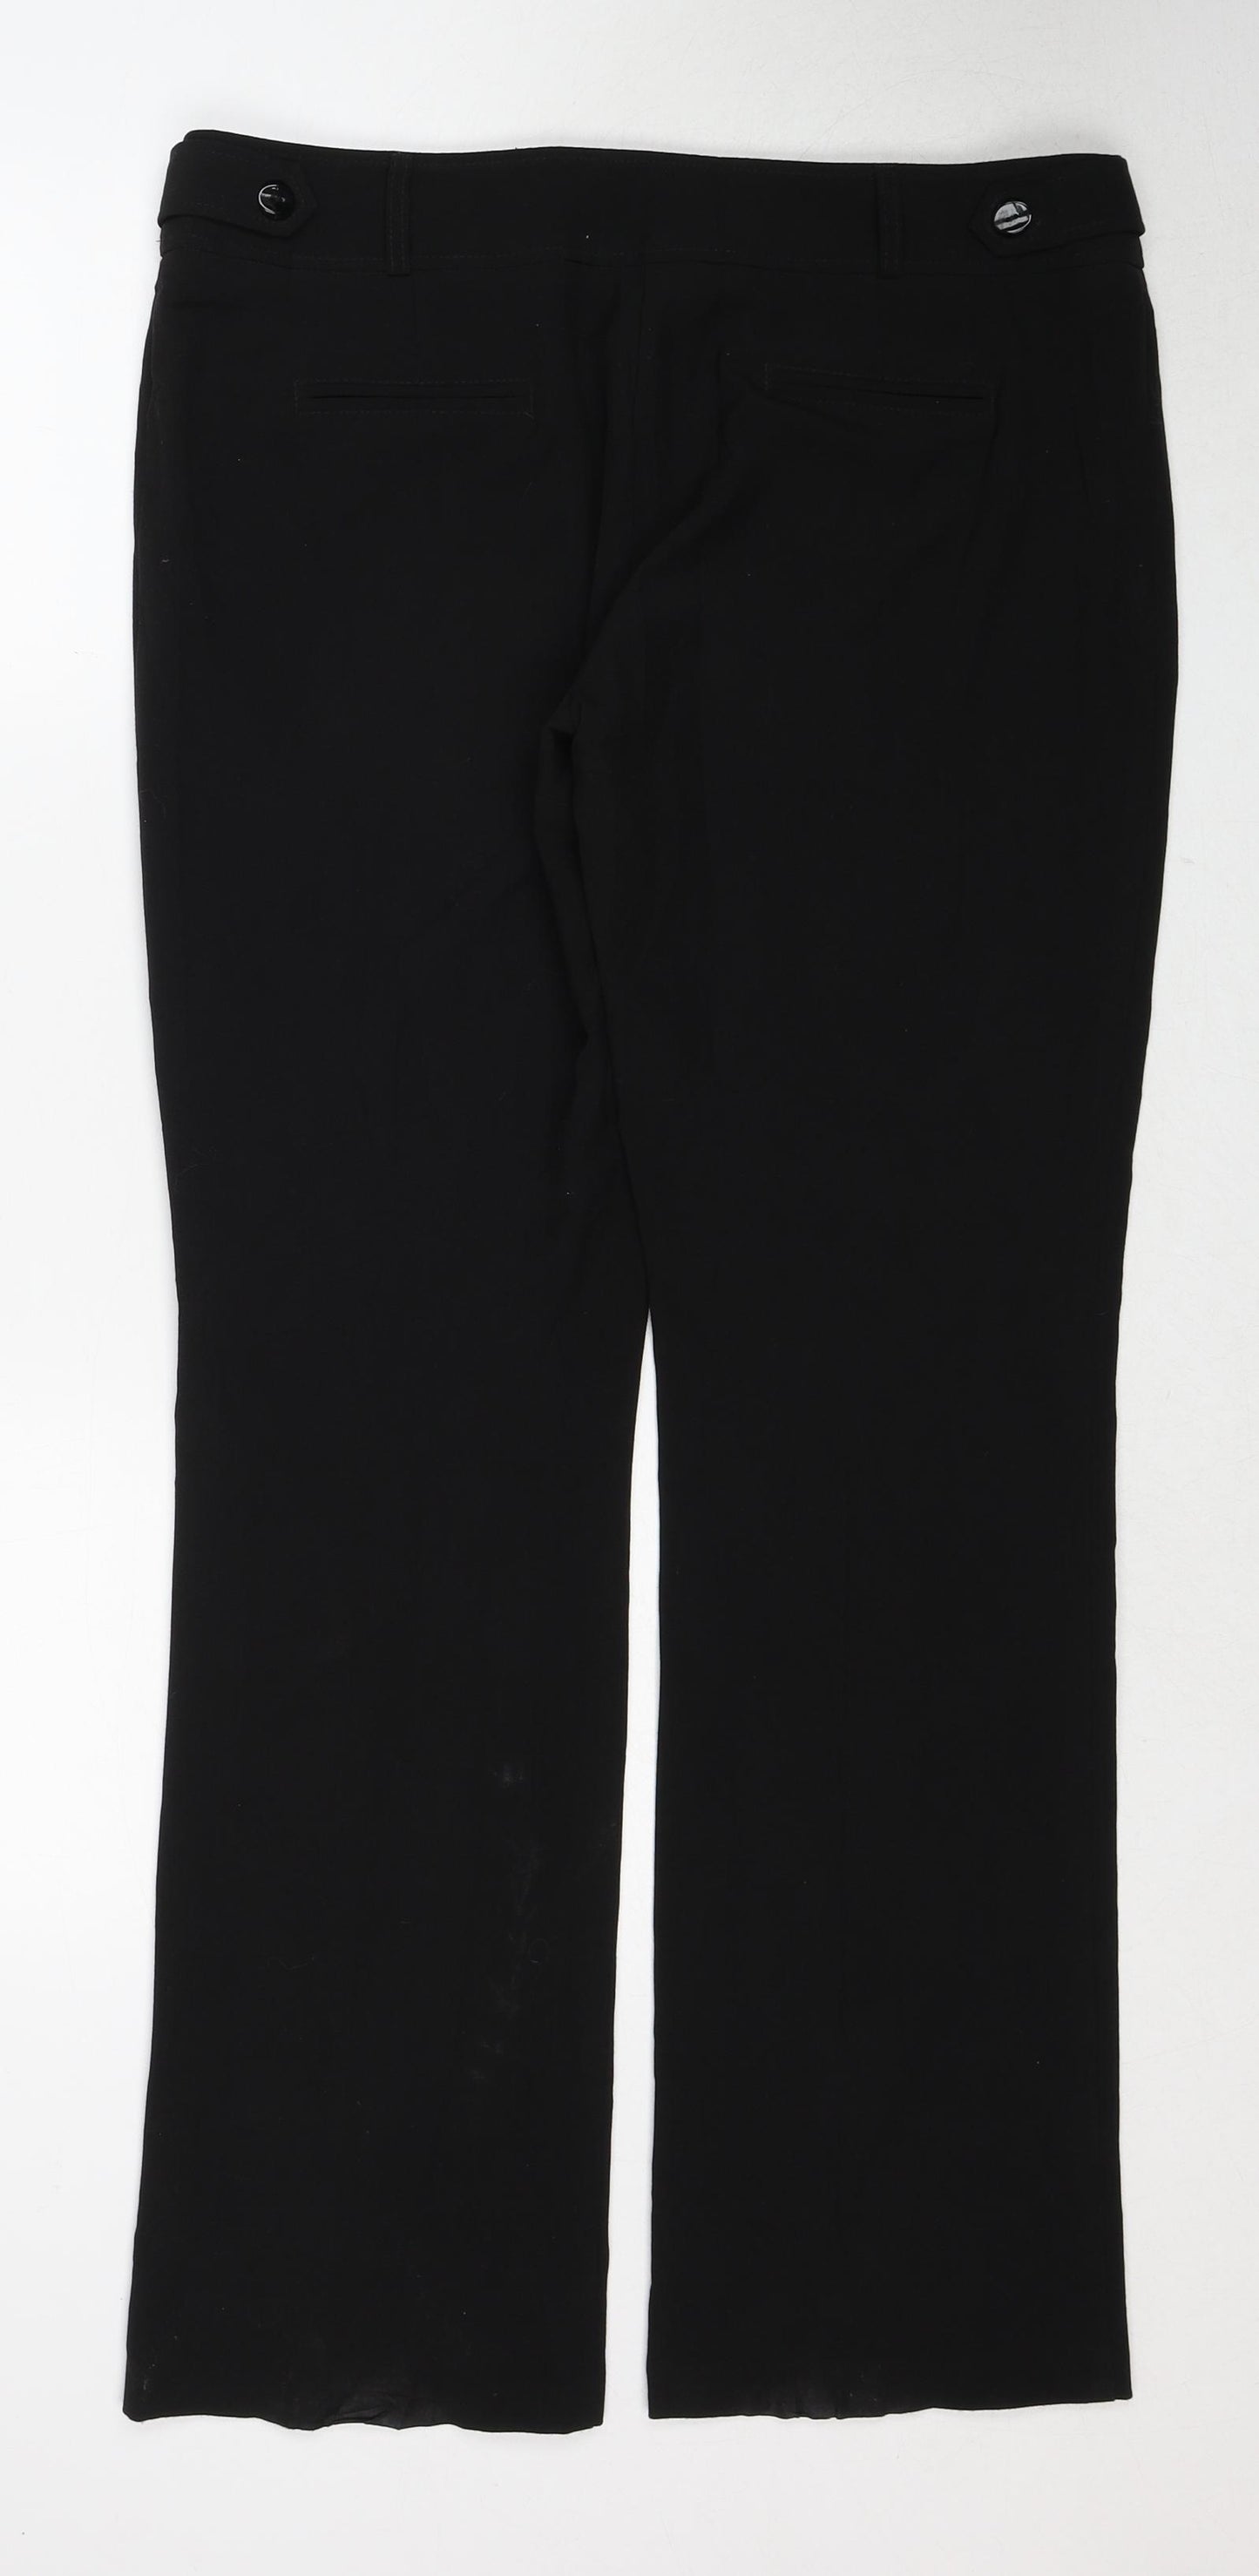 Red Herring Womens Black Polyester Dress Pants Trousers Size 14 Regular